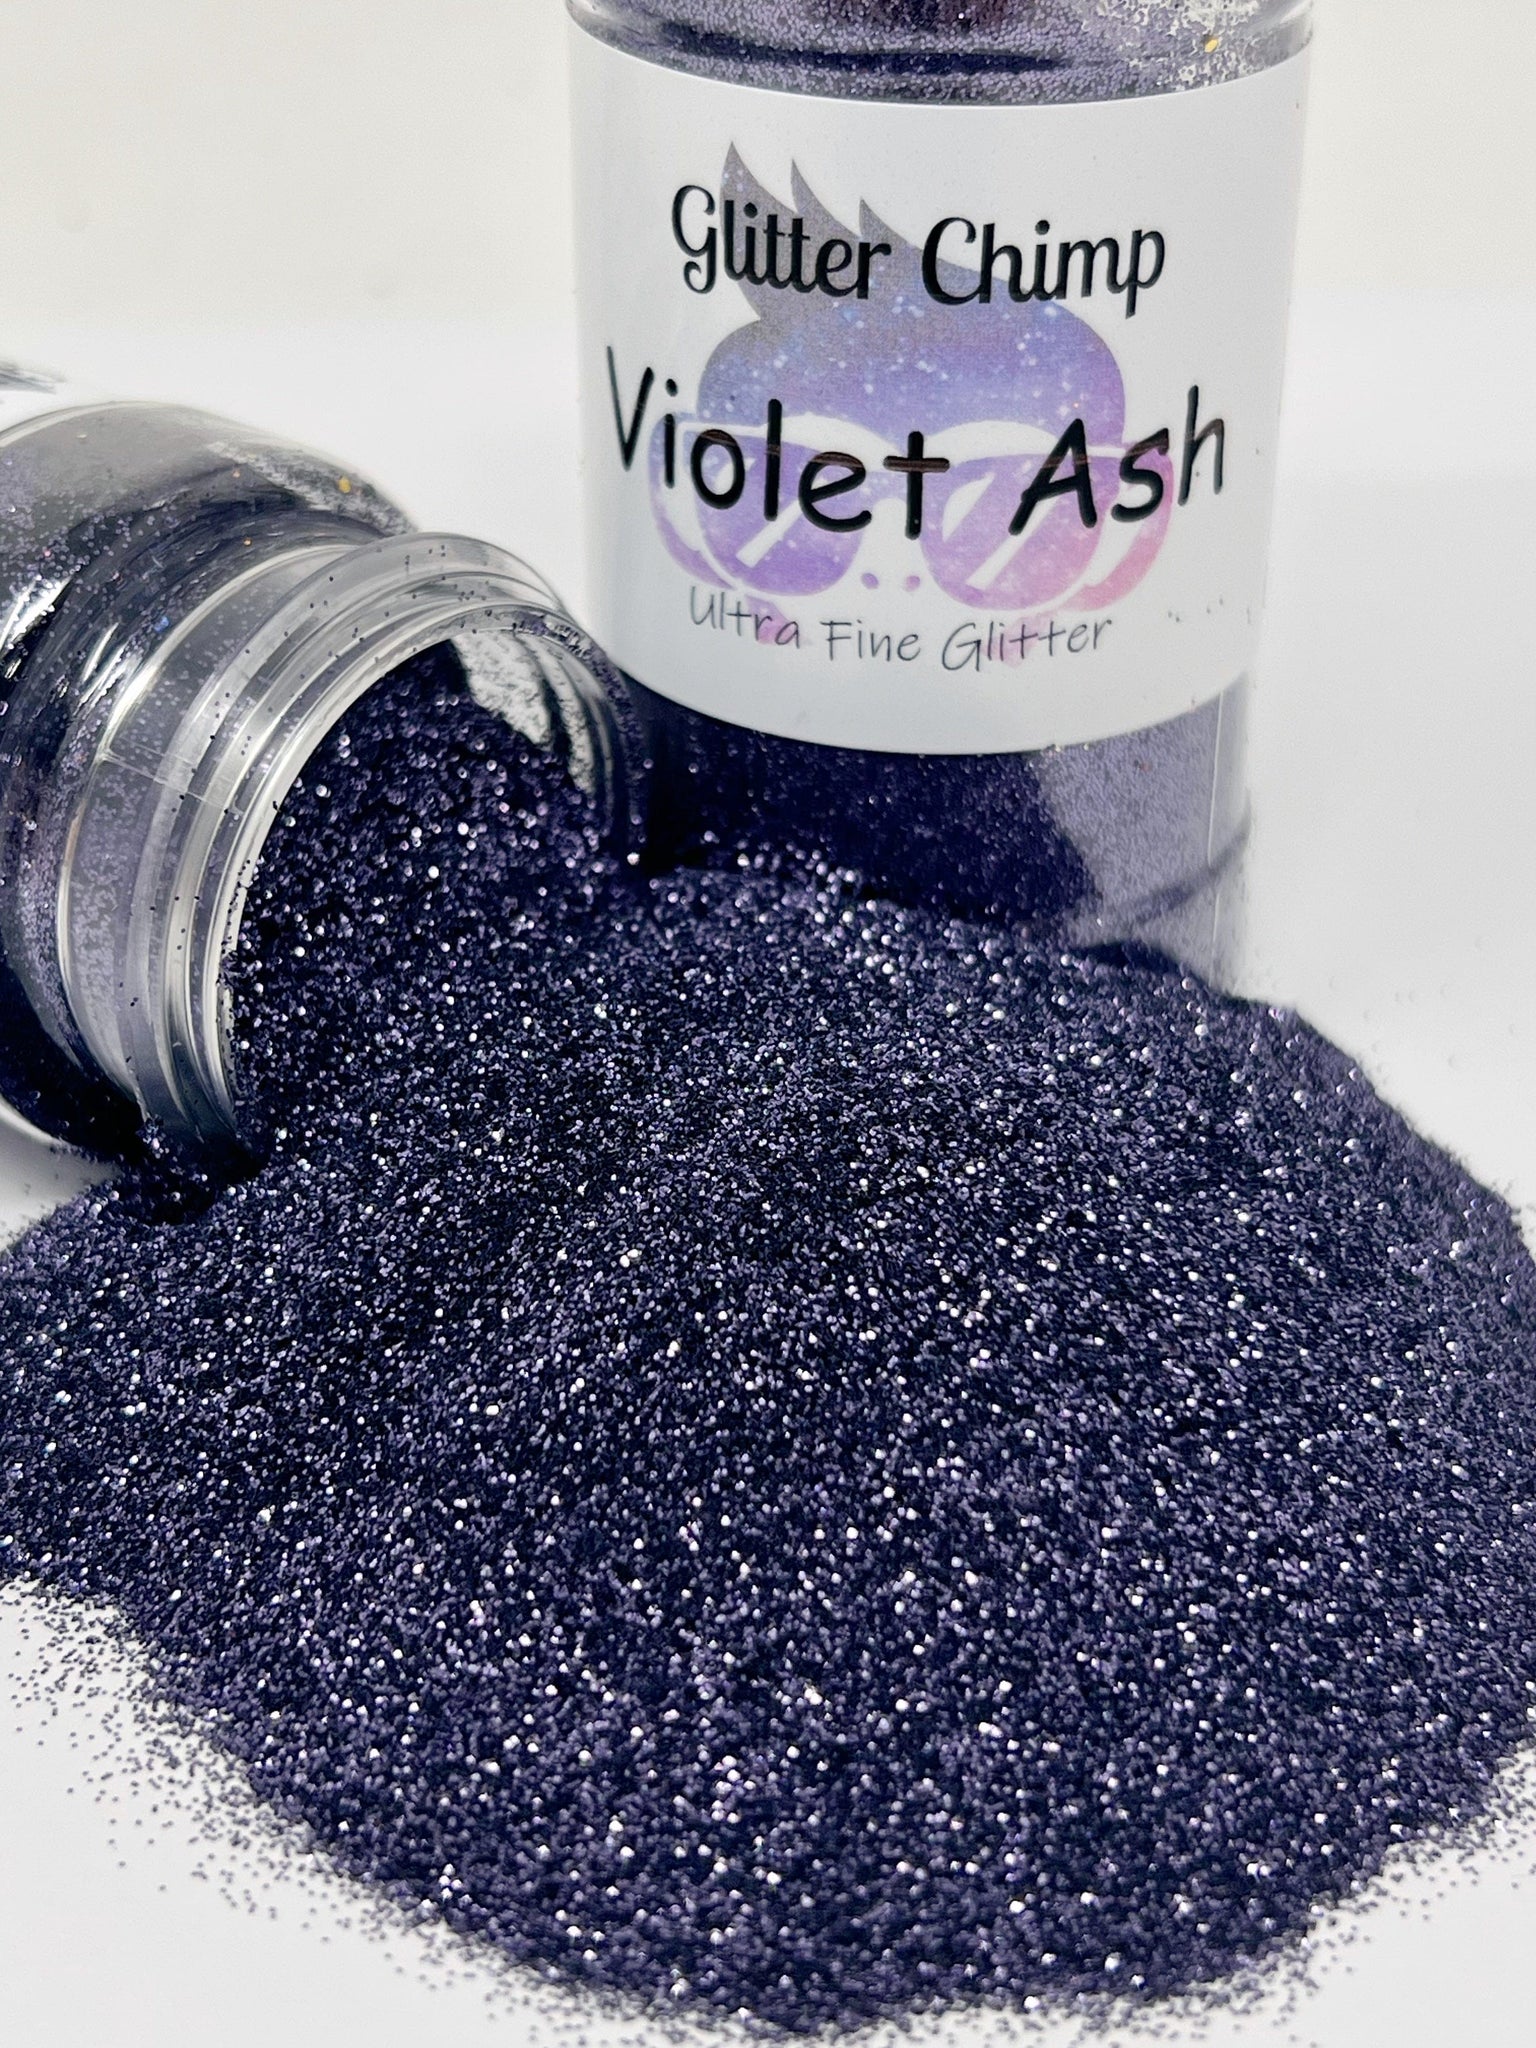 Violet Ash - Ultra Fine Glitter – Glitter Chimp